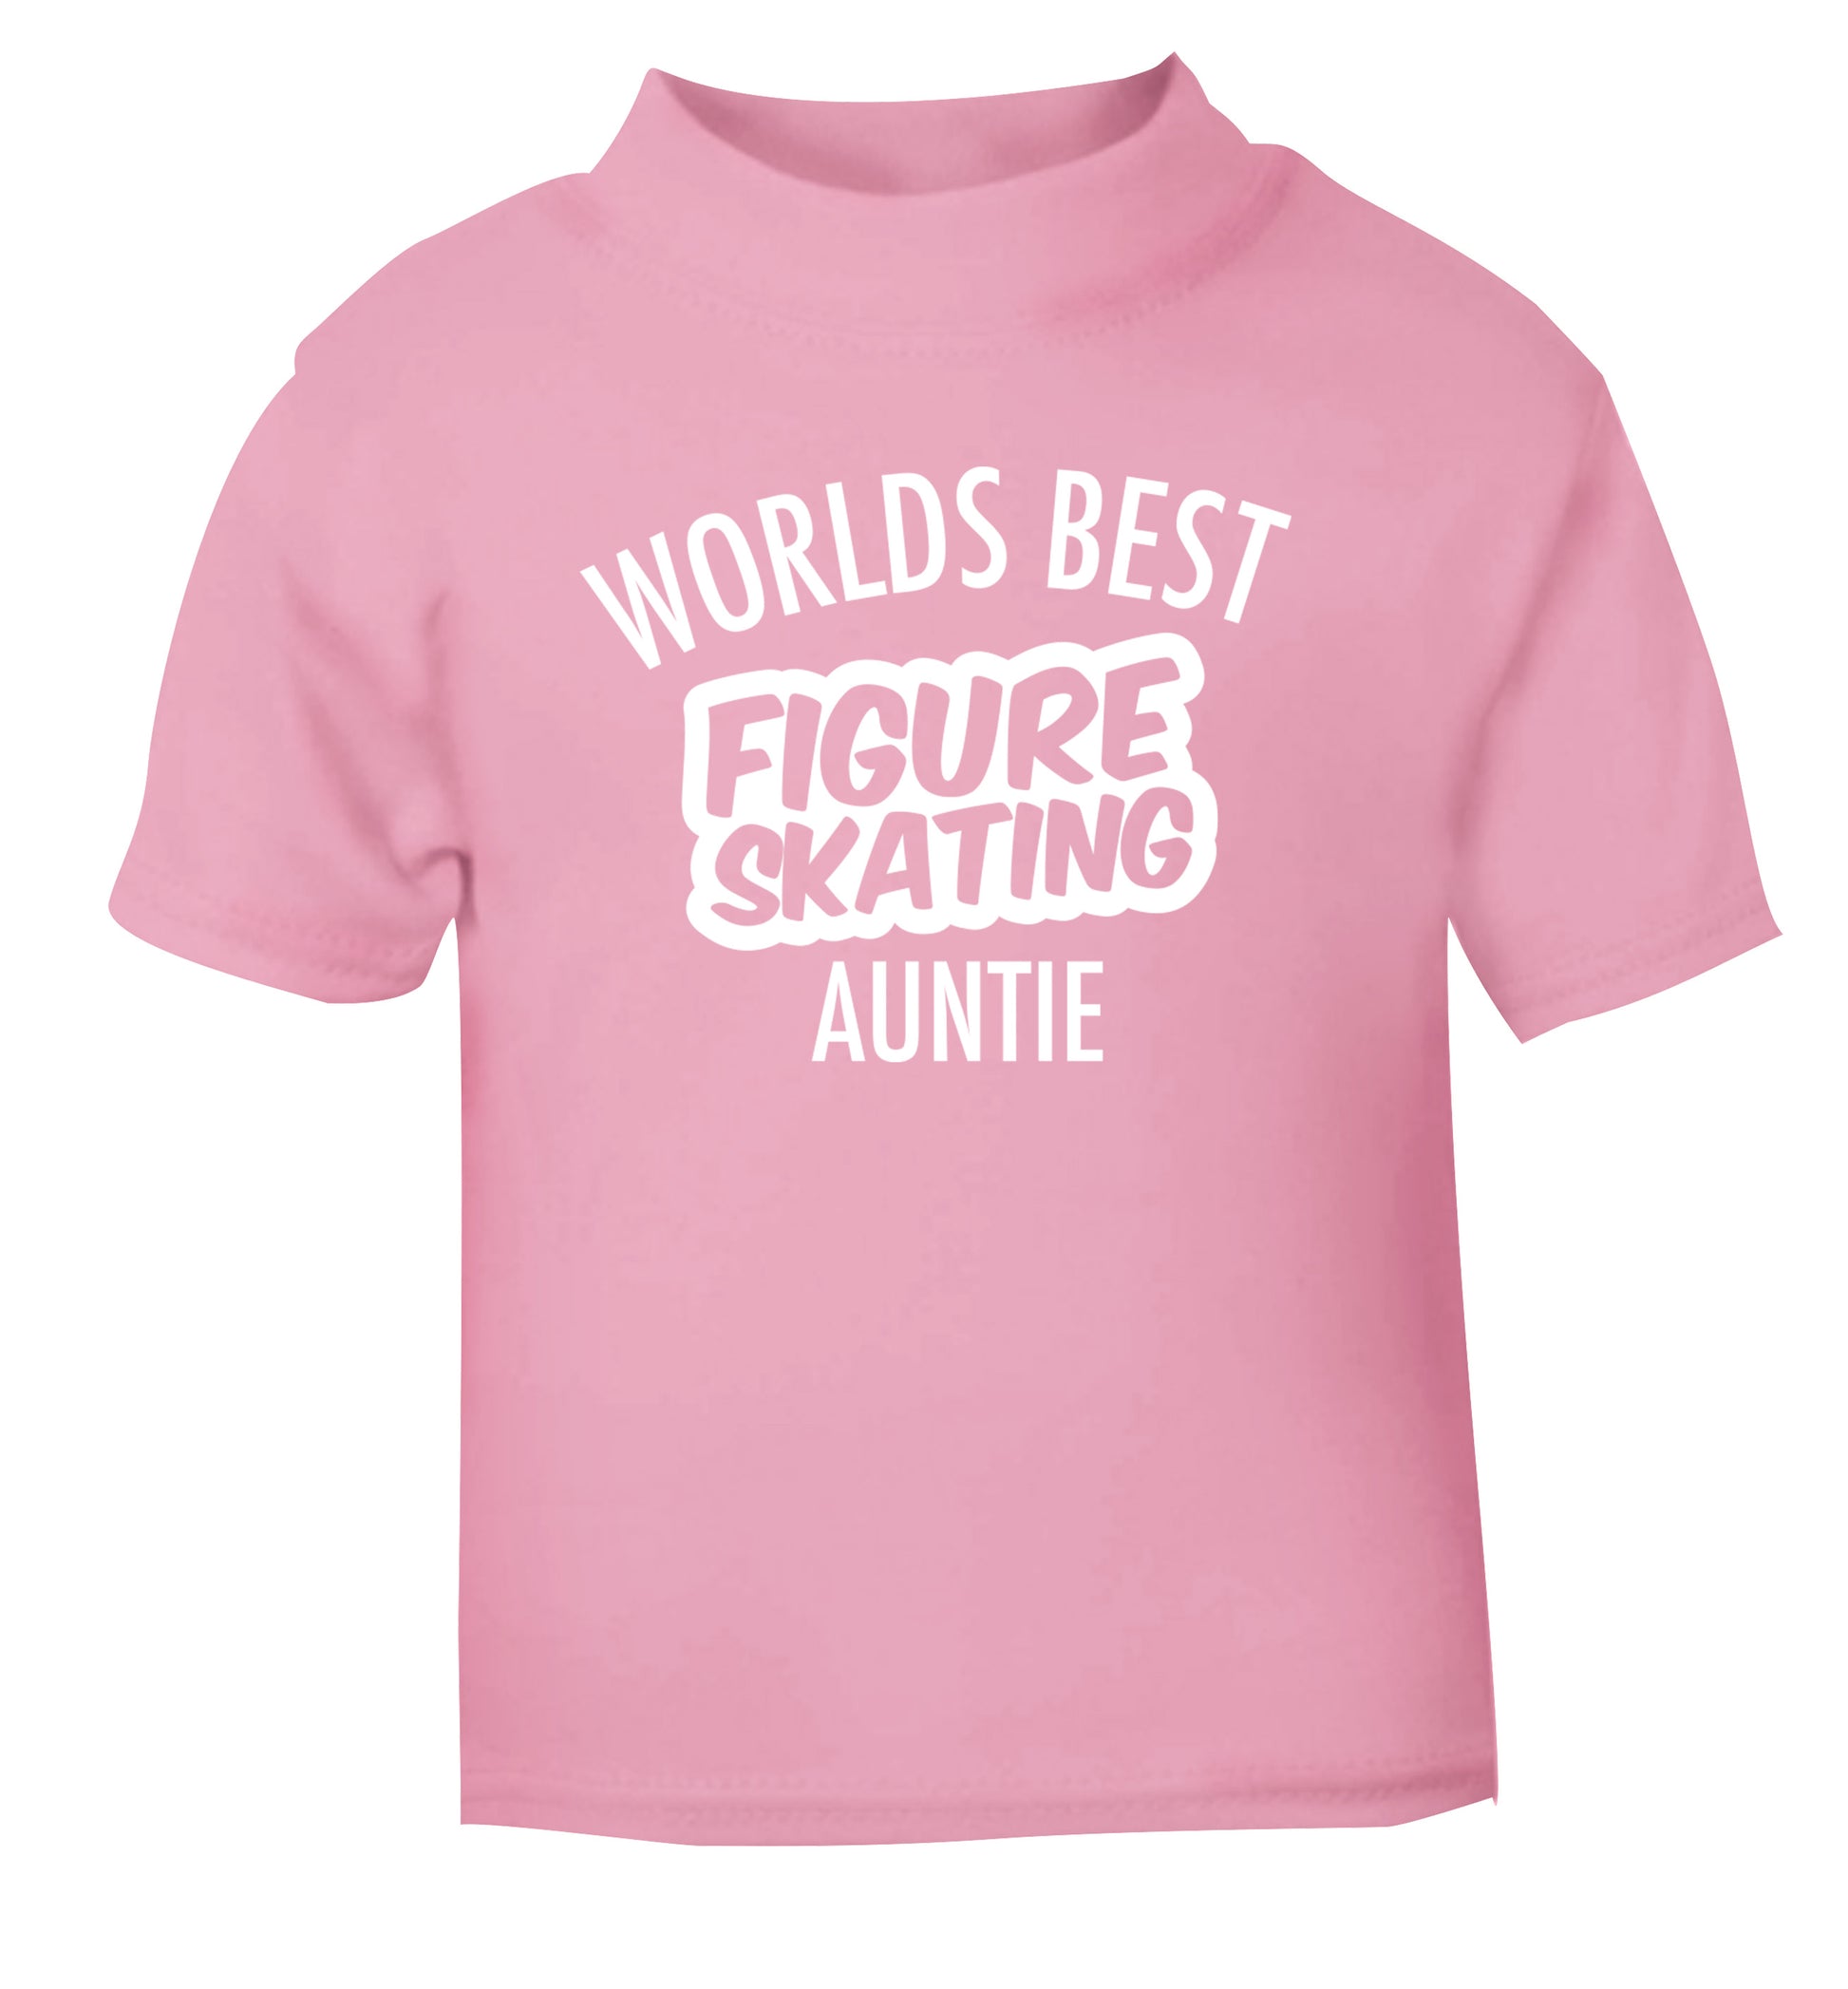 Worlds best figure skating auntie light pink Baby Toddler Tshirt 2 Years